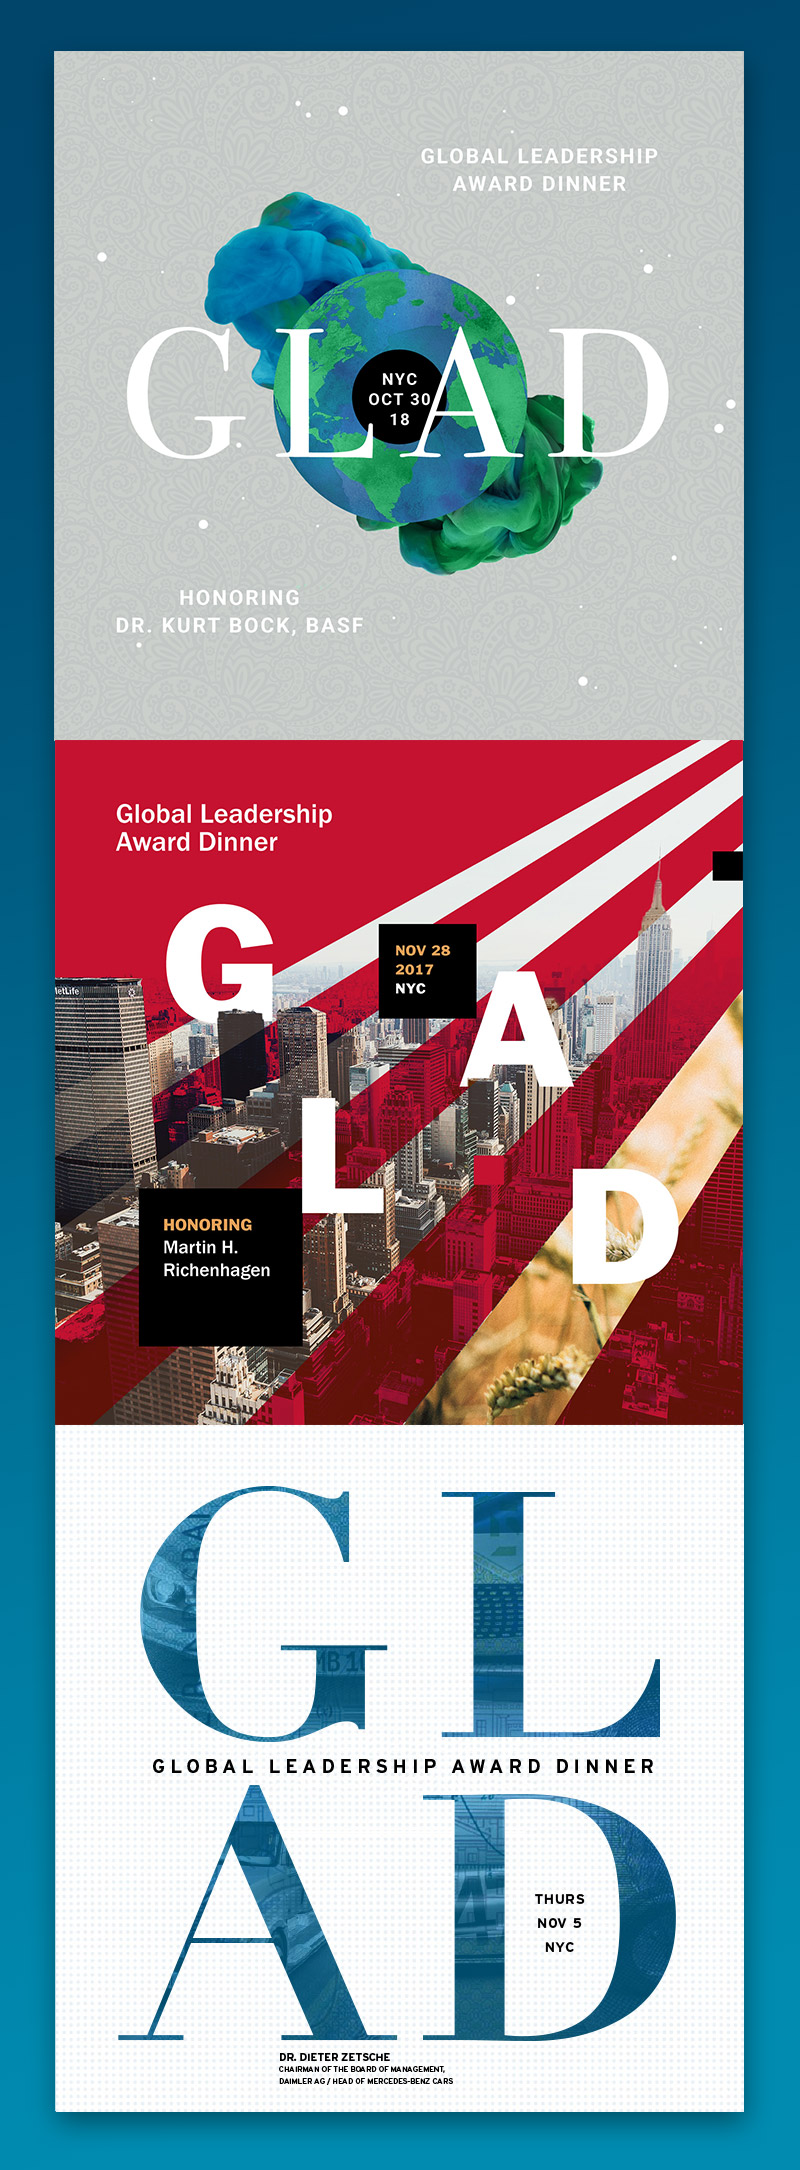 AICGS - Global Leadership Awards Dinner - Program Covers